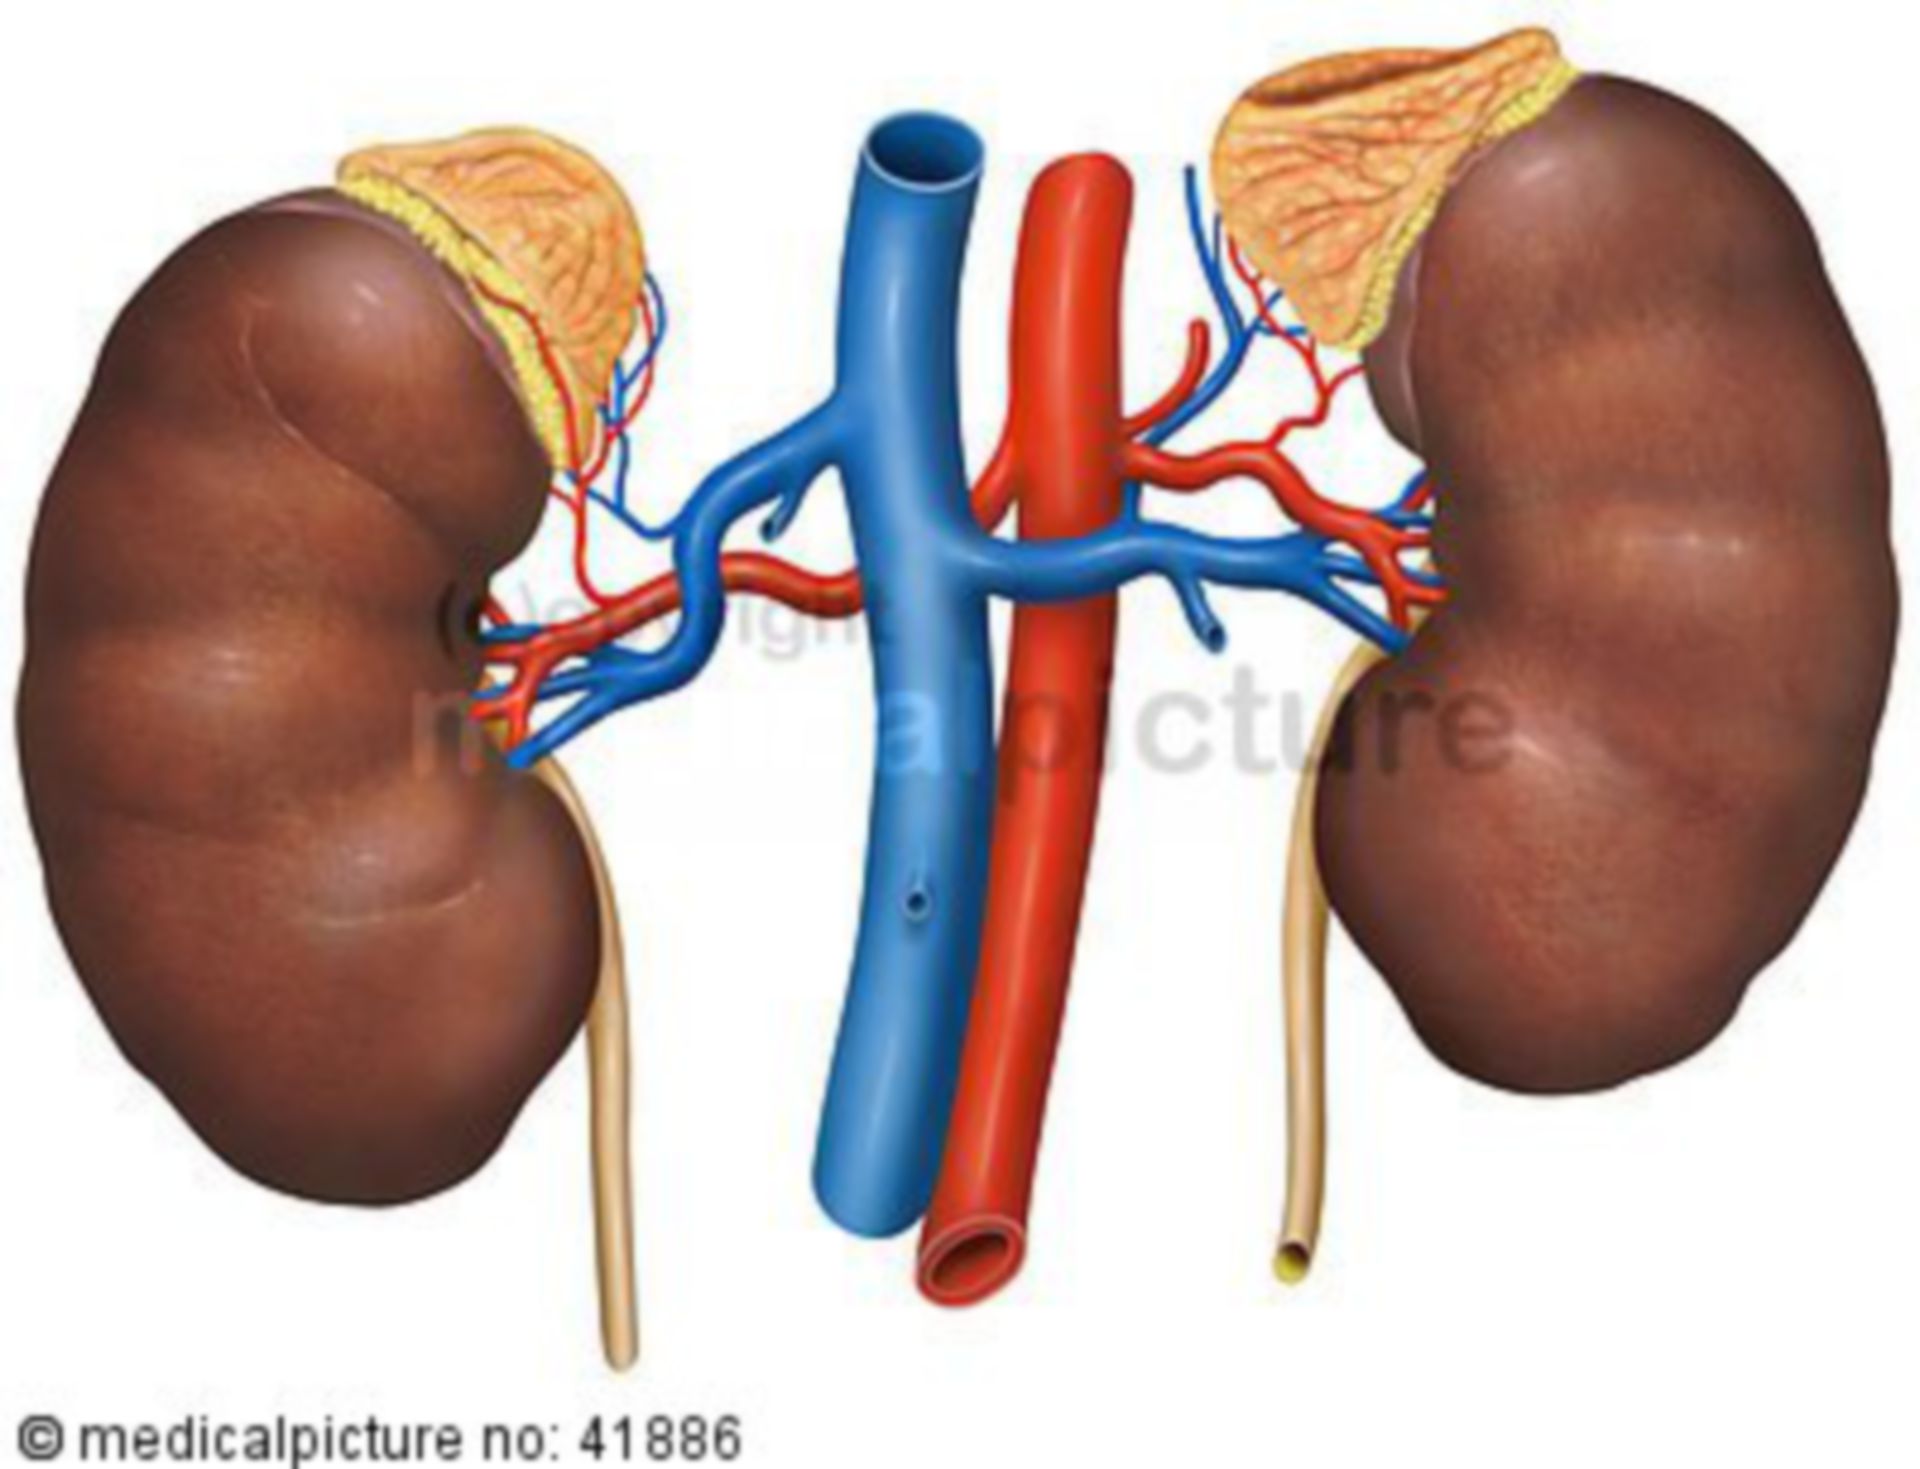 Kidney, adrenal gland